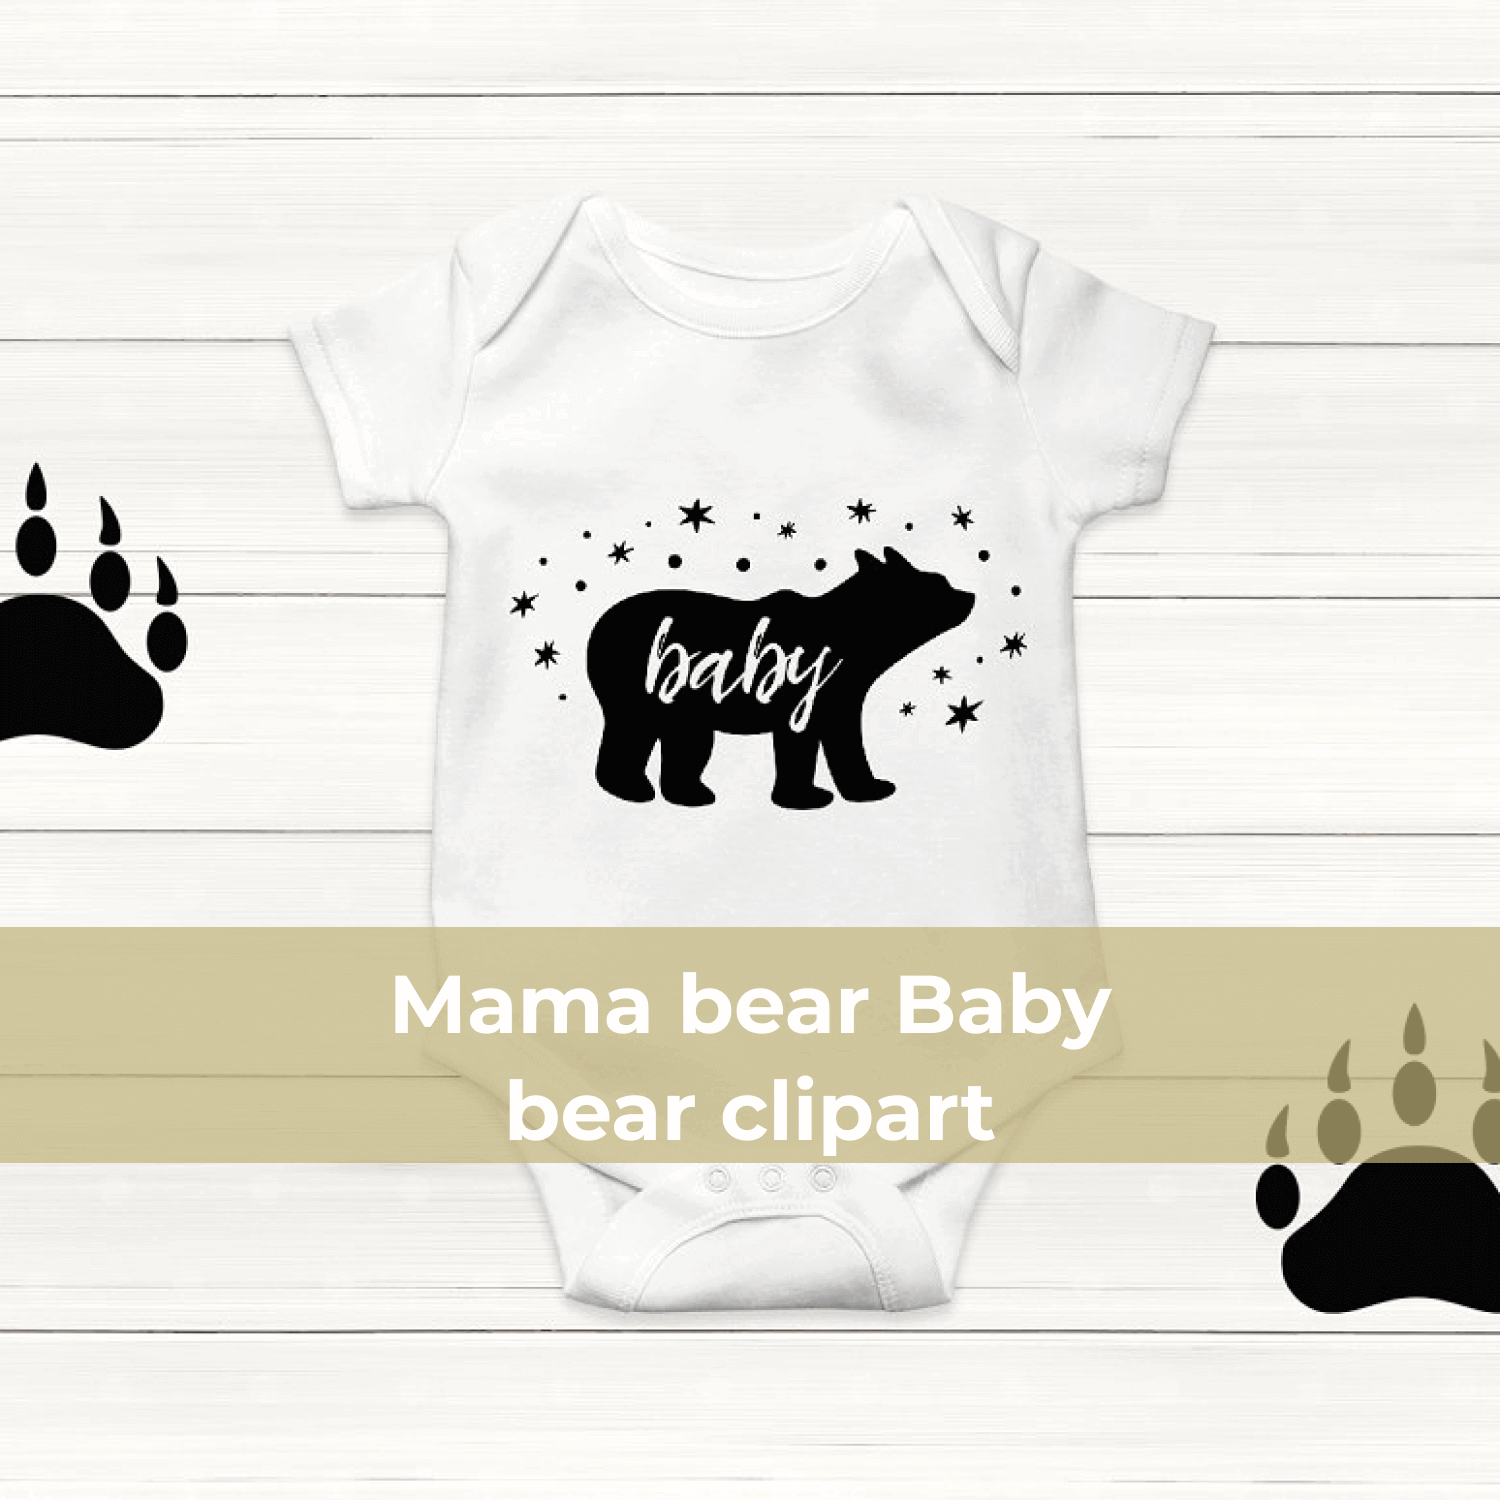 Mama Bear, Baby Bear Clipart on Baby's Clothes.